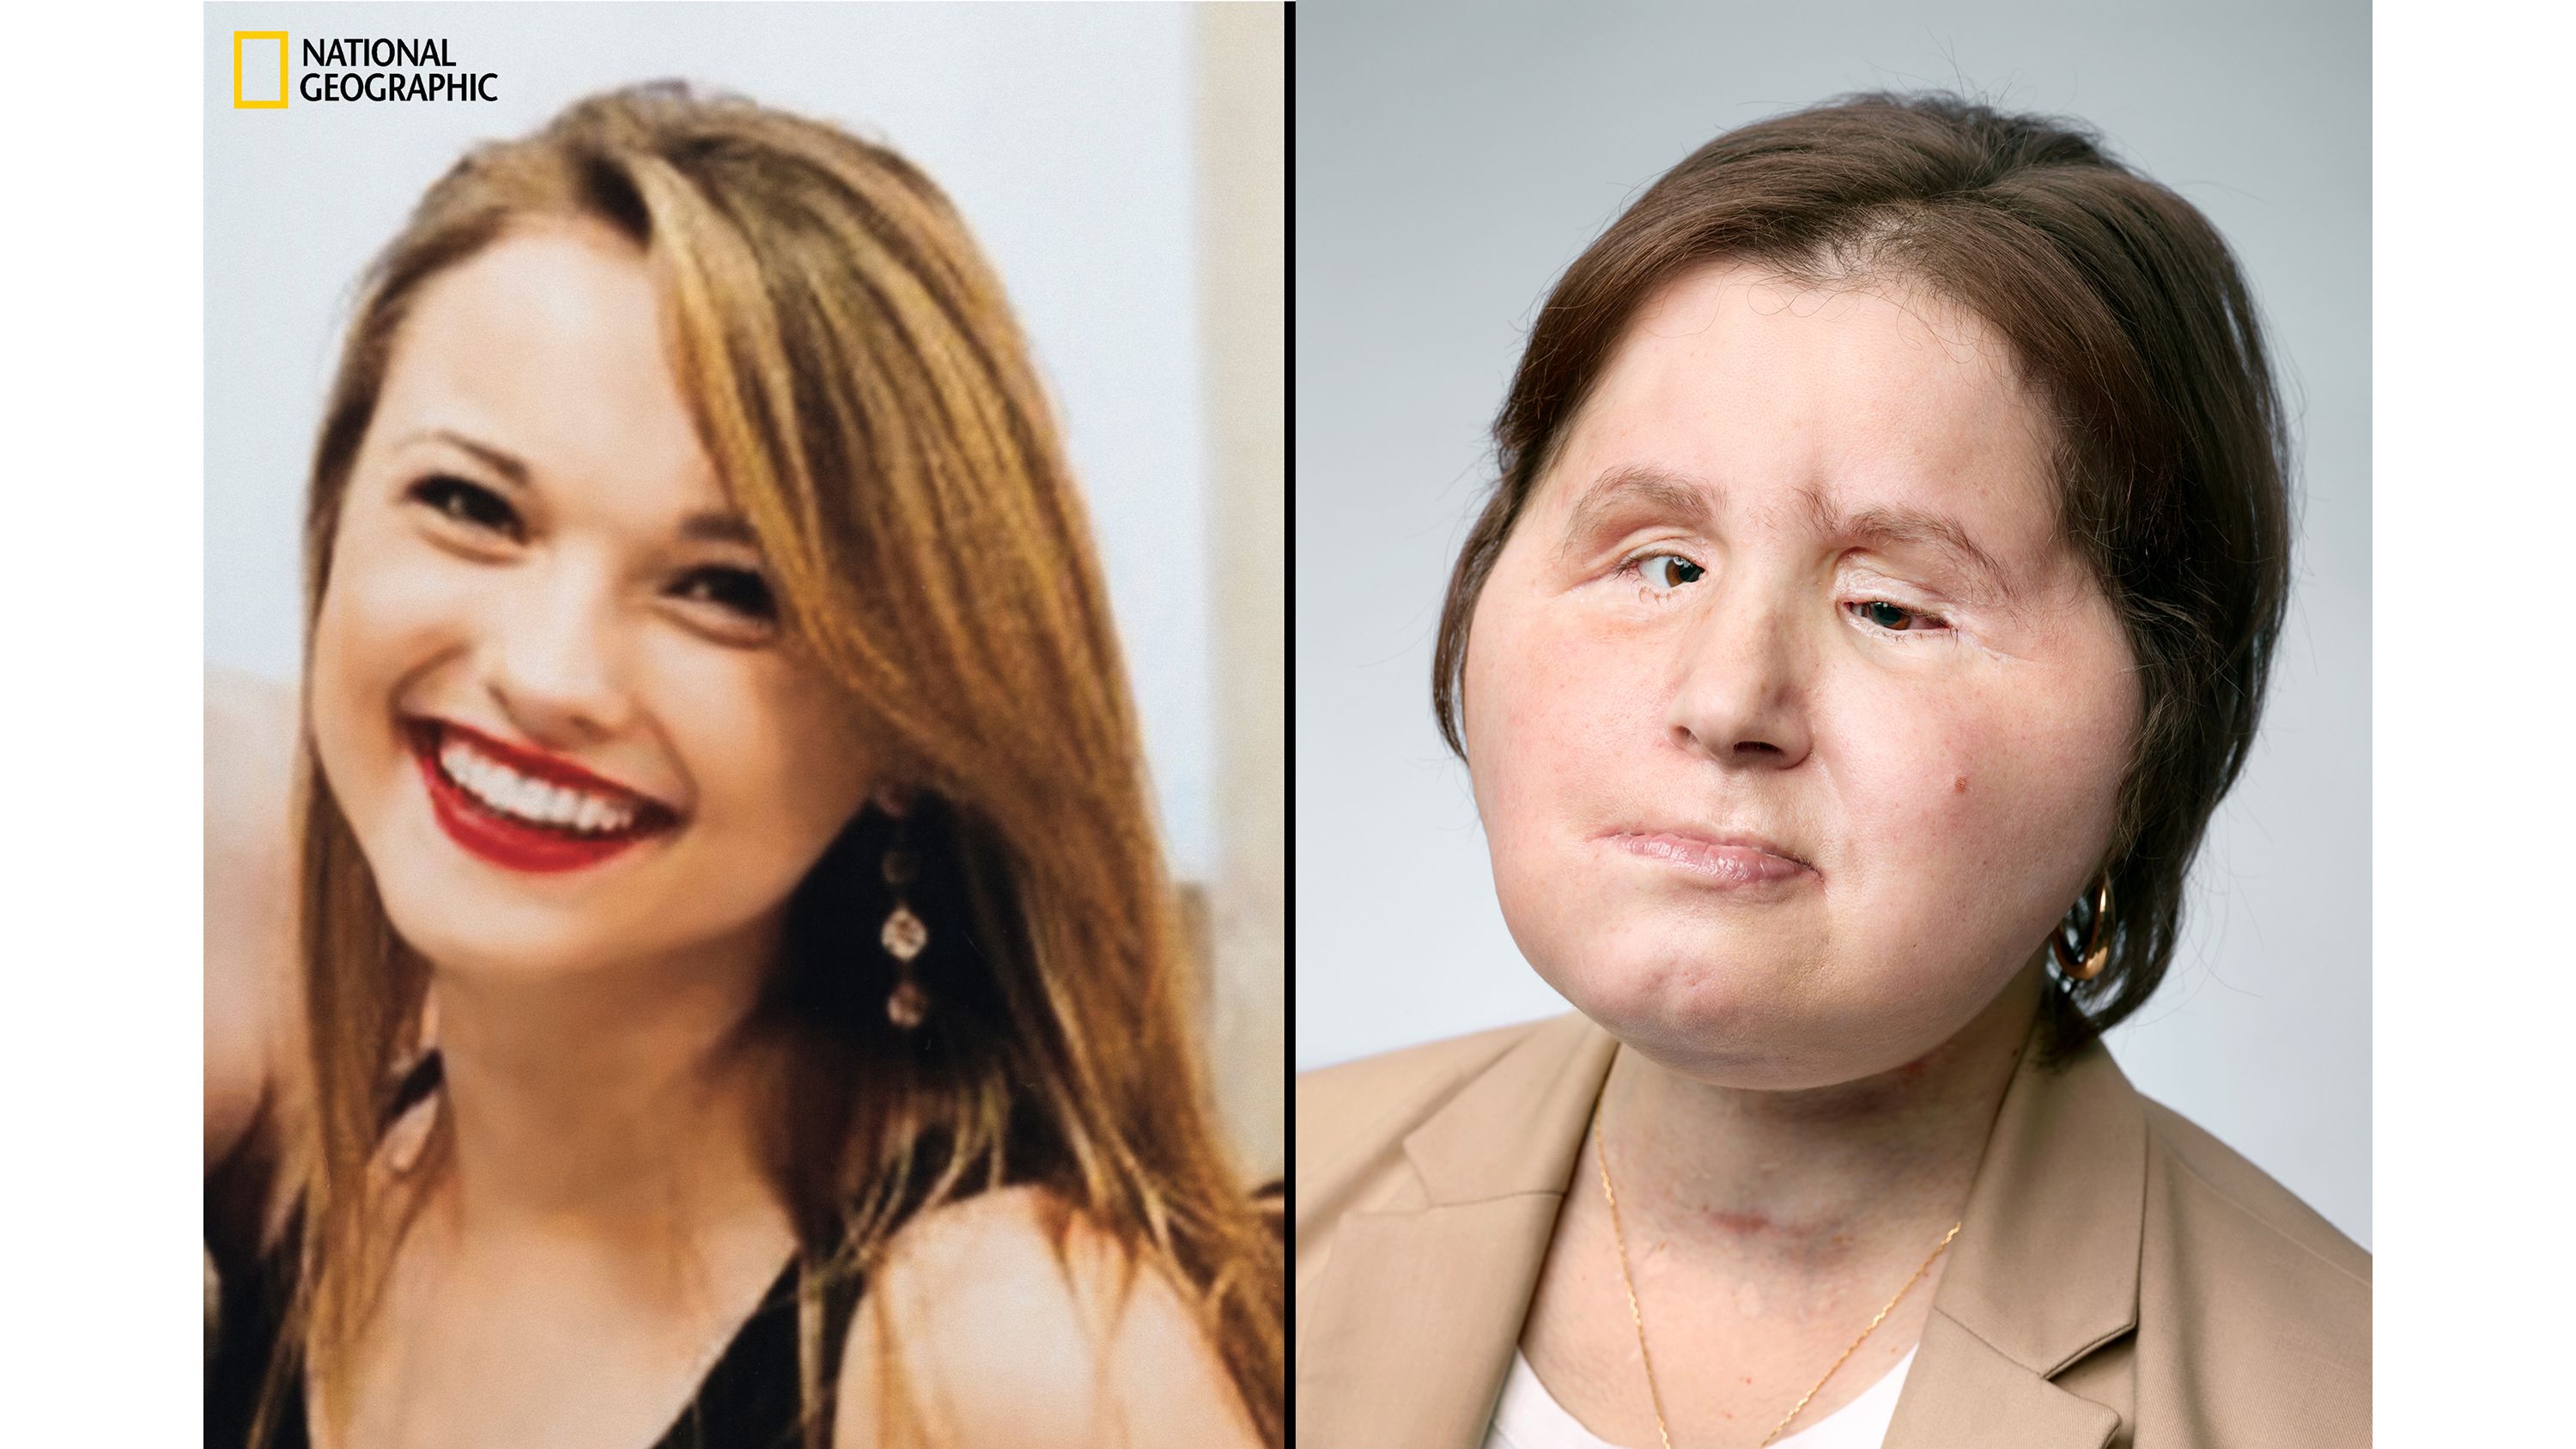 Disfigured Girls Sex Videos - Katie Stubblefield: Face transplant gives suicide survivor a 'second  chance' | CNN